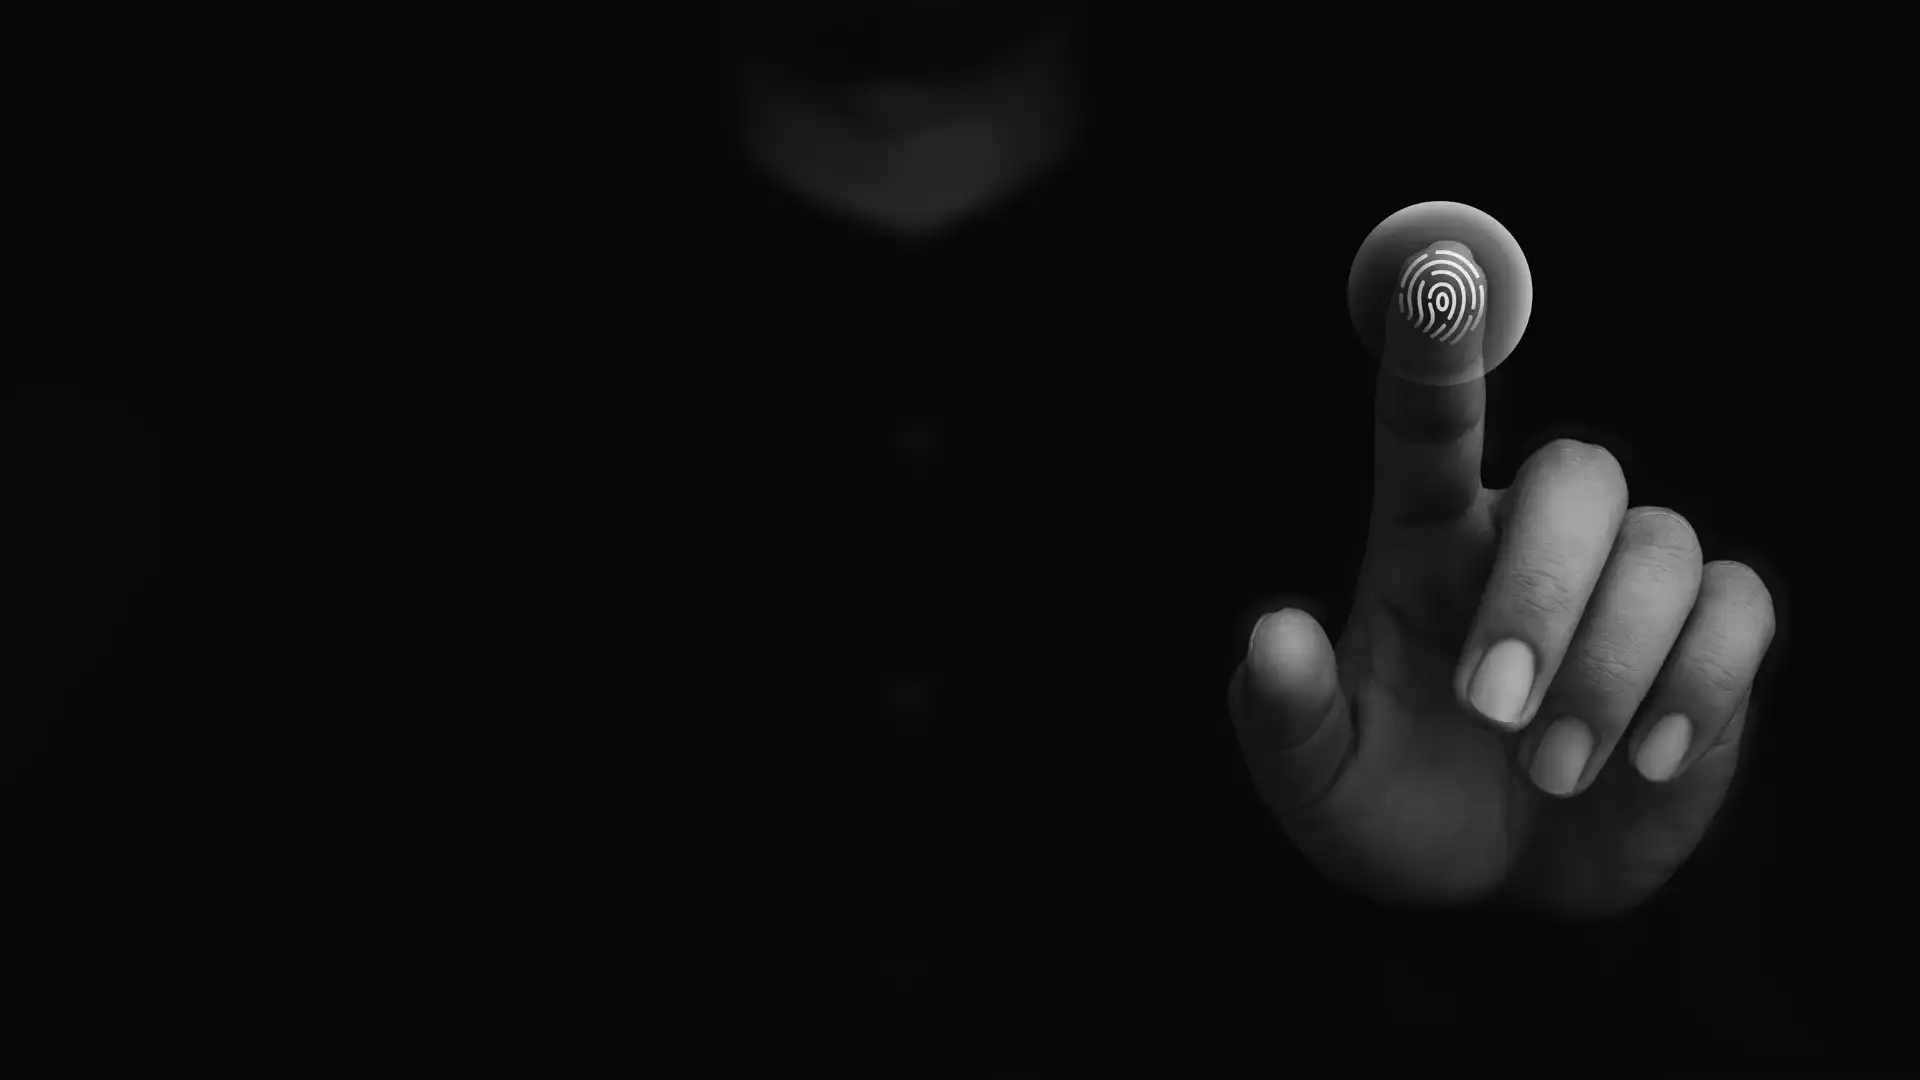 A human finger making a haptic gesture with a digital fingerprint overlay.